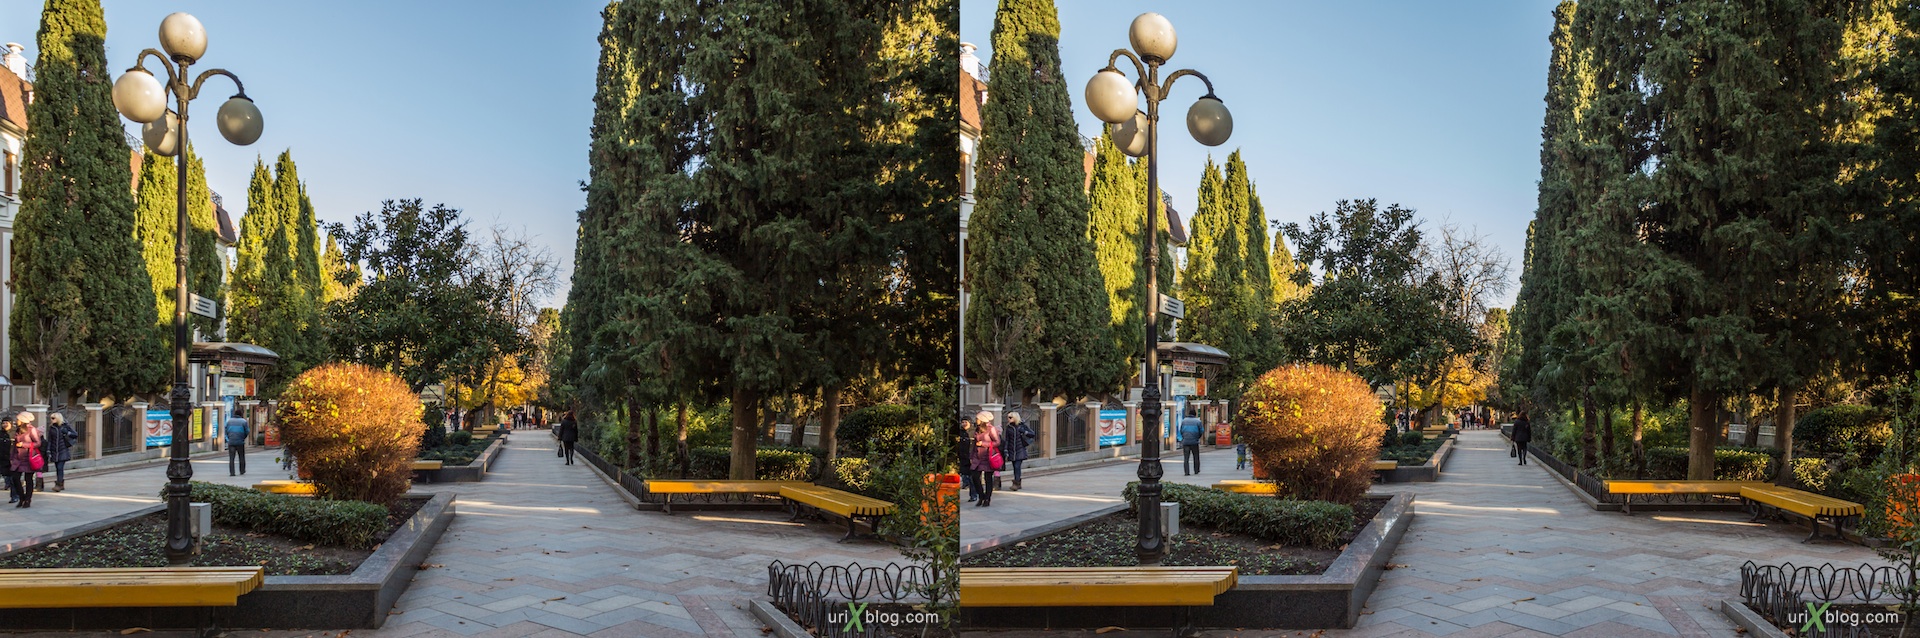 2012, Pushkinskaya street, Yalta, evening, coast city, Crimea, Ukraine, 3D, stereo pair, cross-eyed, crossview, cross view stereo pair, stereoscopic